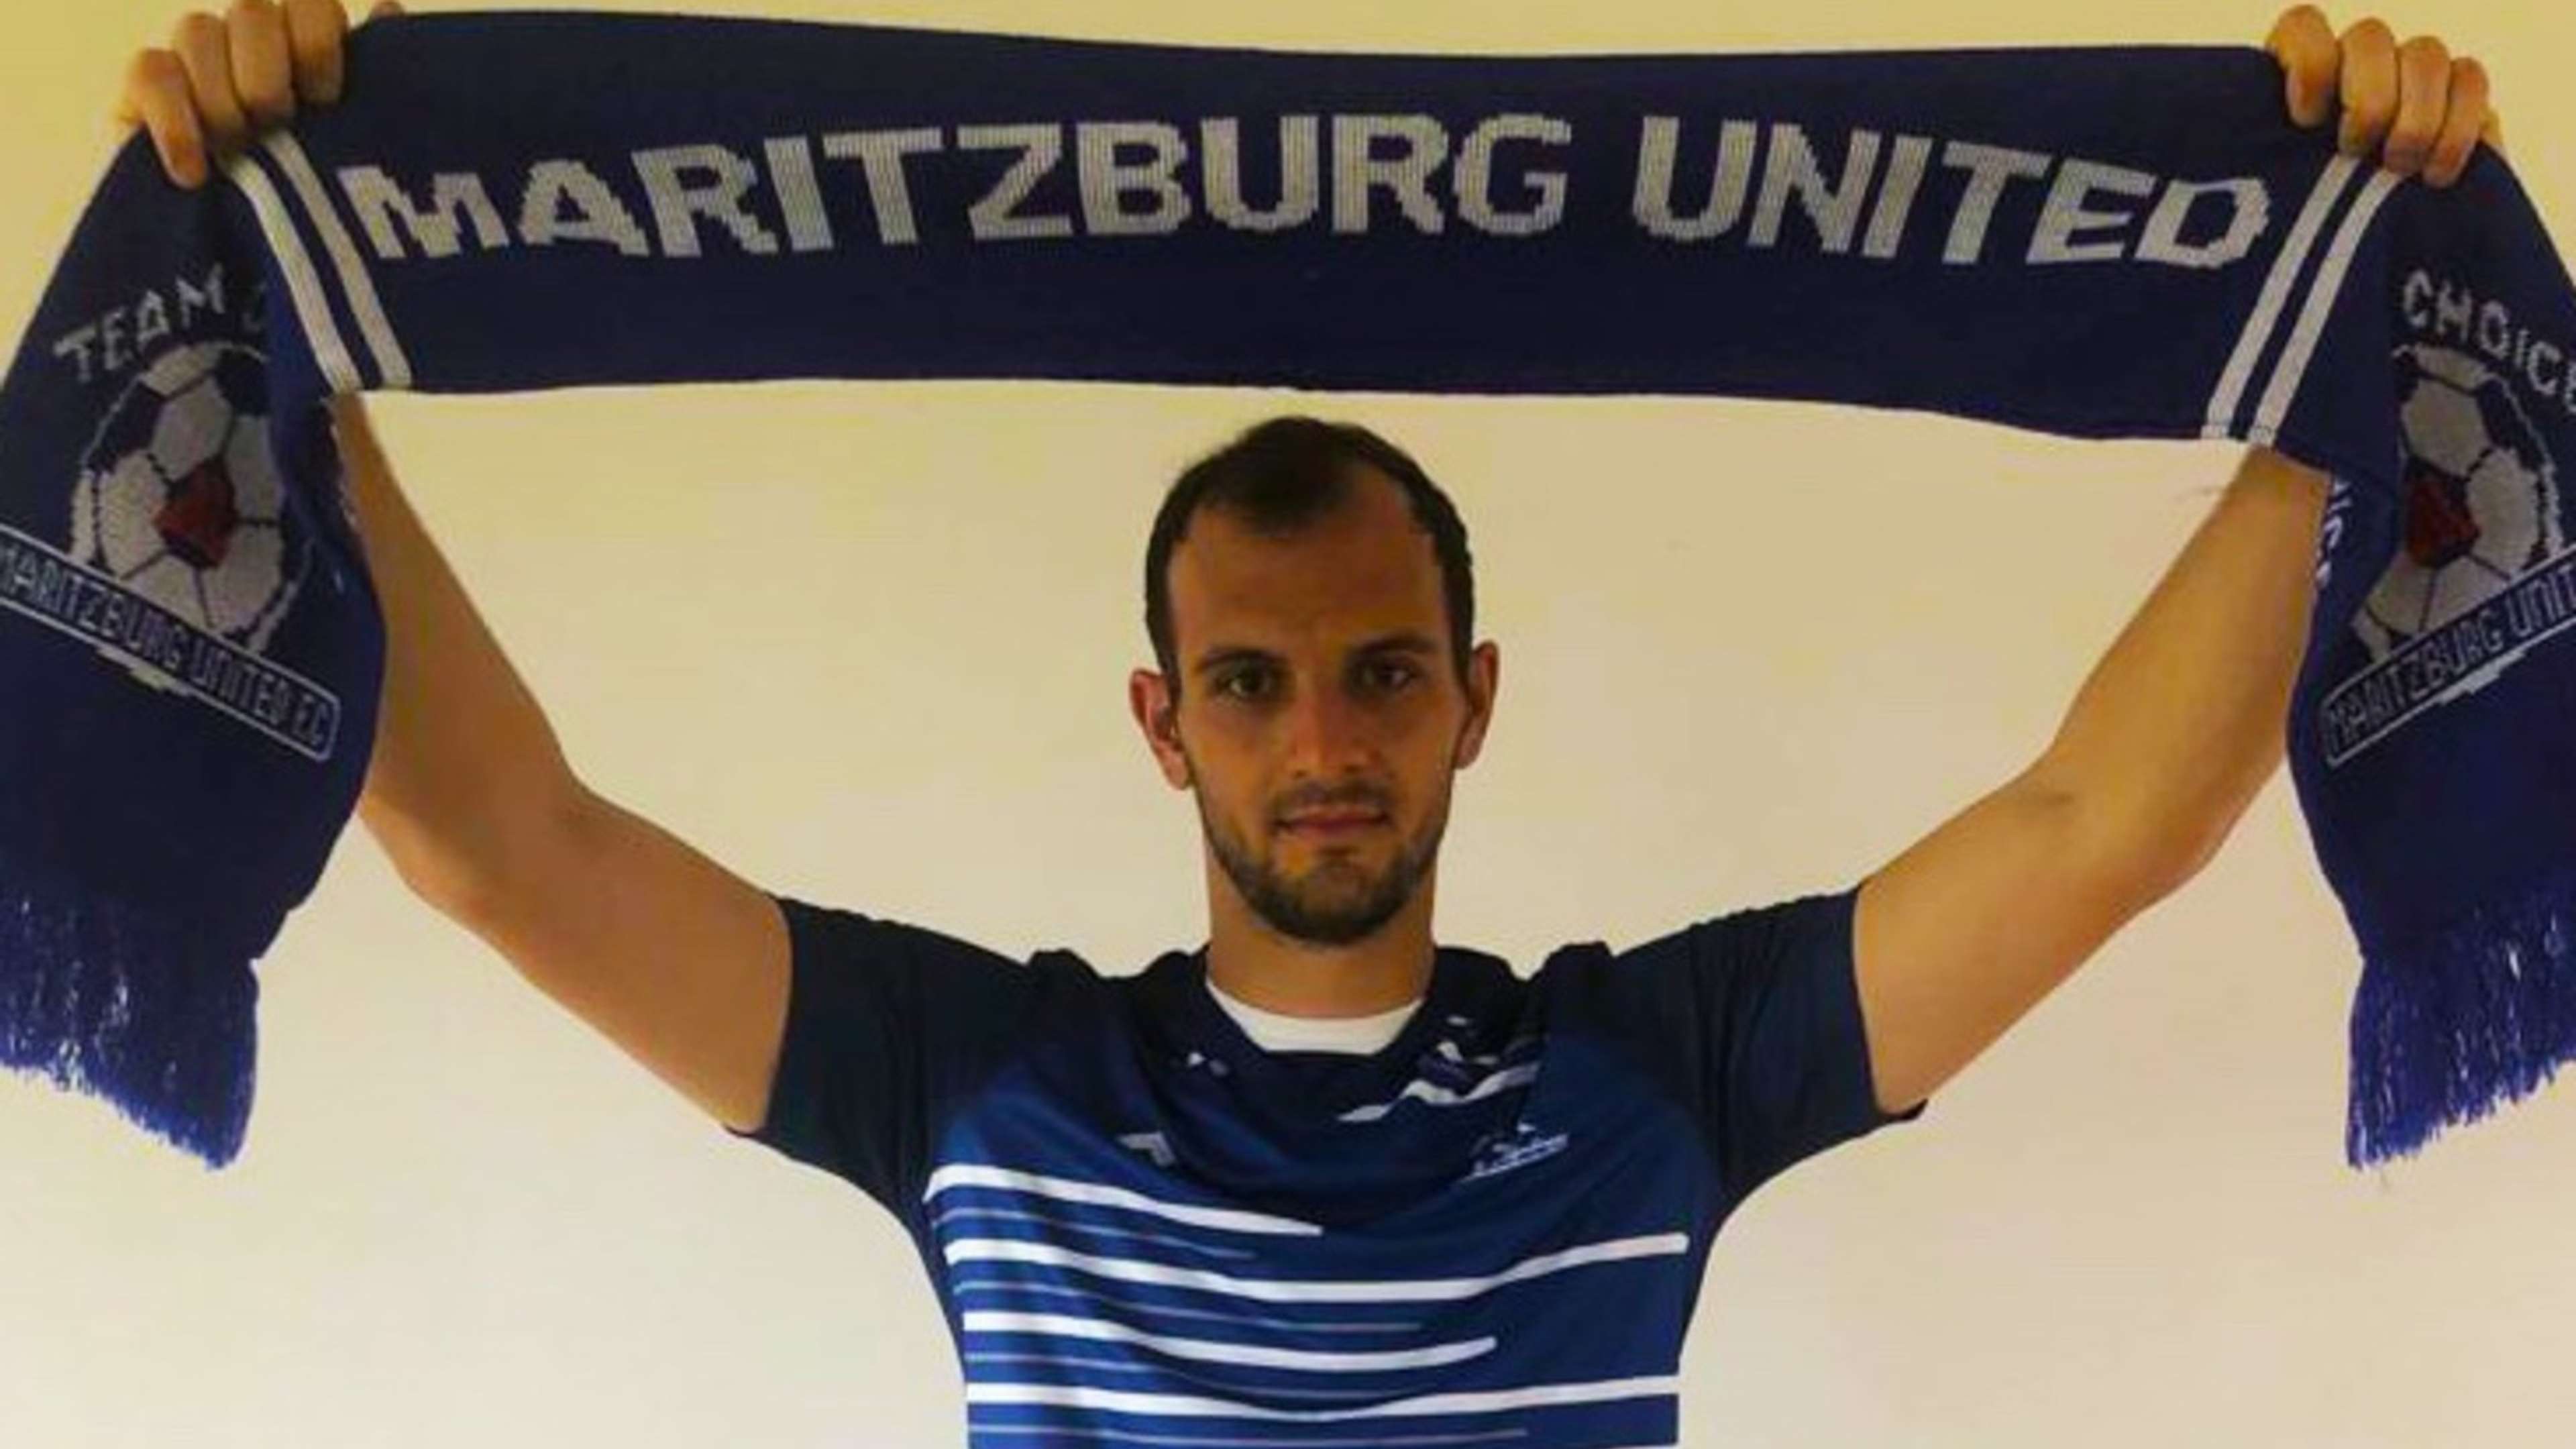 Marcel Engelhardt, Maritzburg United, January 2021